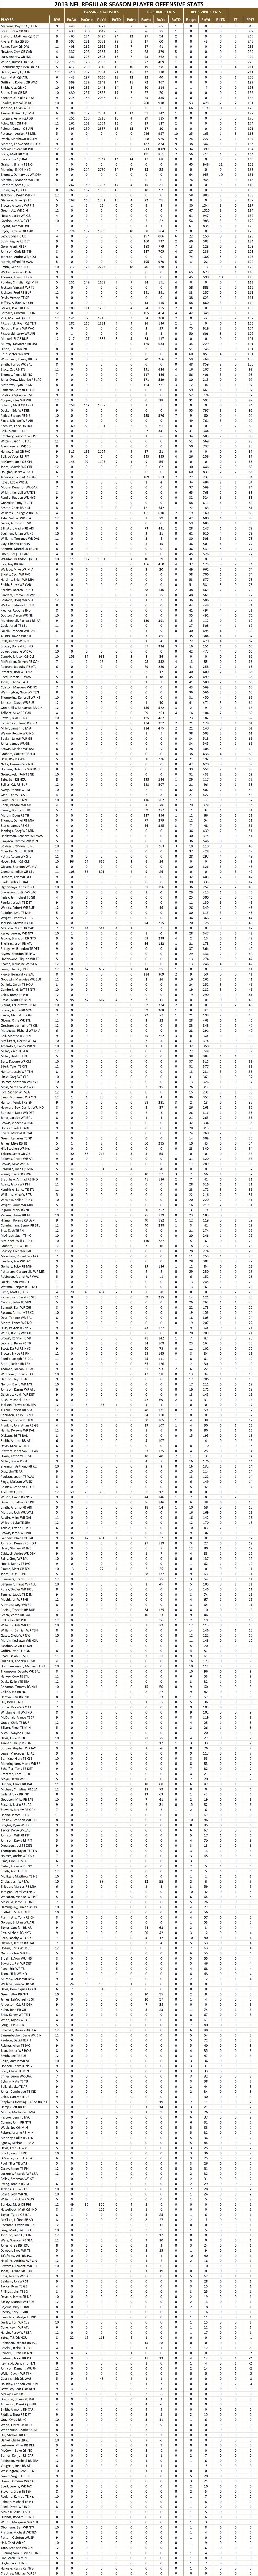 2013 National Football League Pool Season Player Offensive Stats